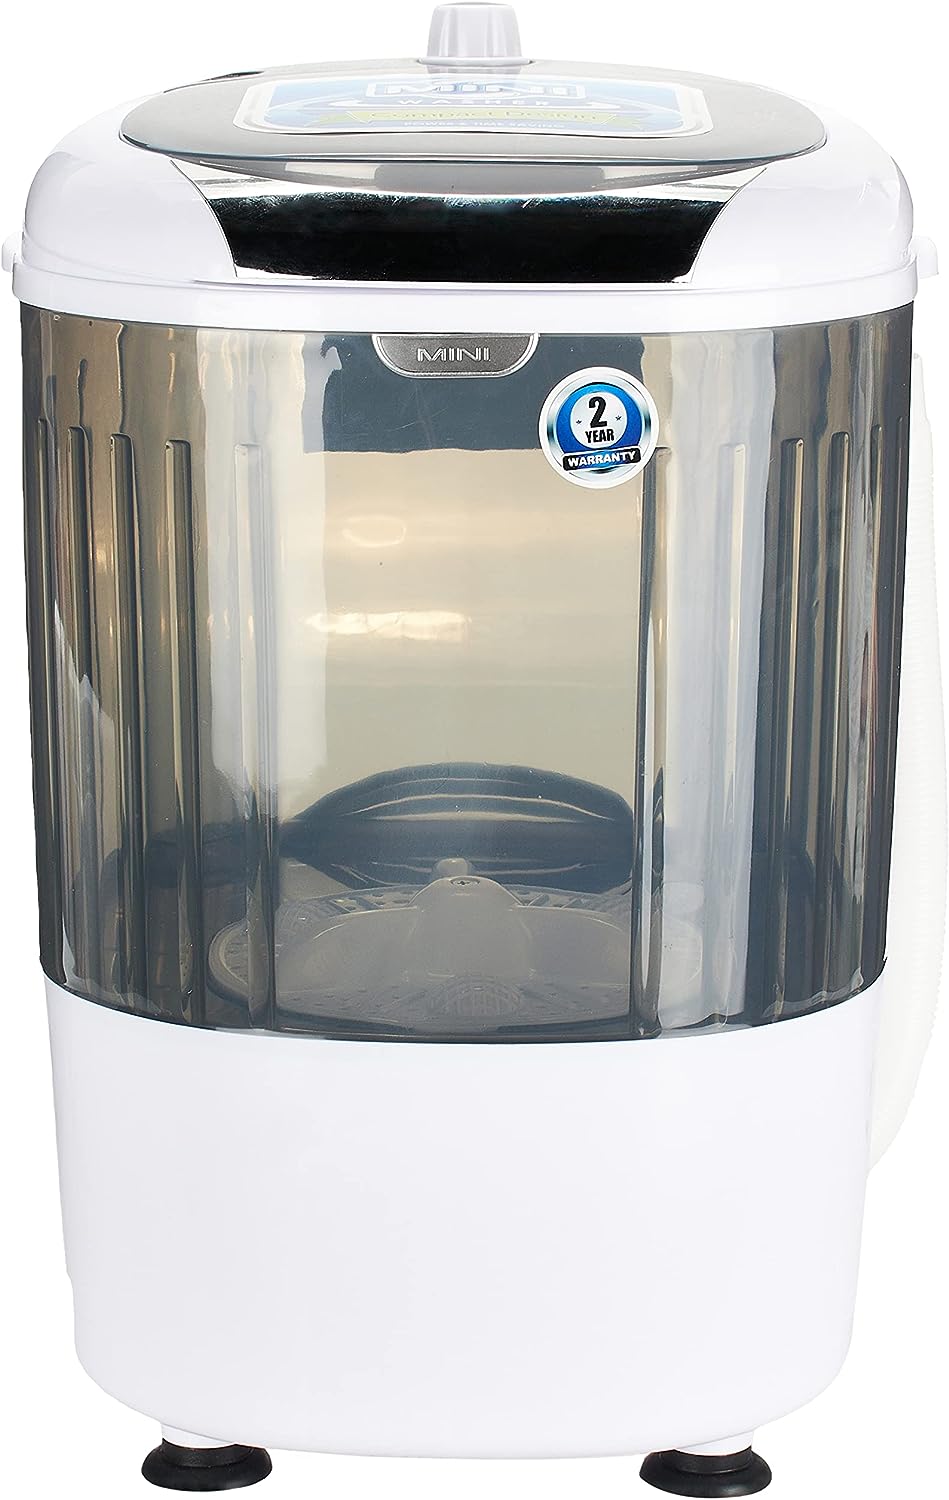 Clikon Automatic Washing Machine, 2.5 Kg, Top Loading, CK607-N